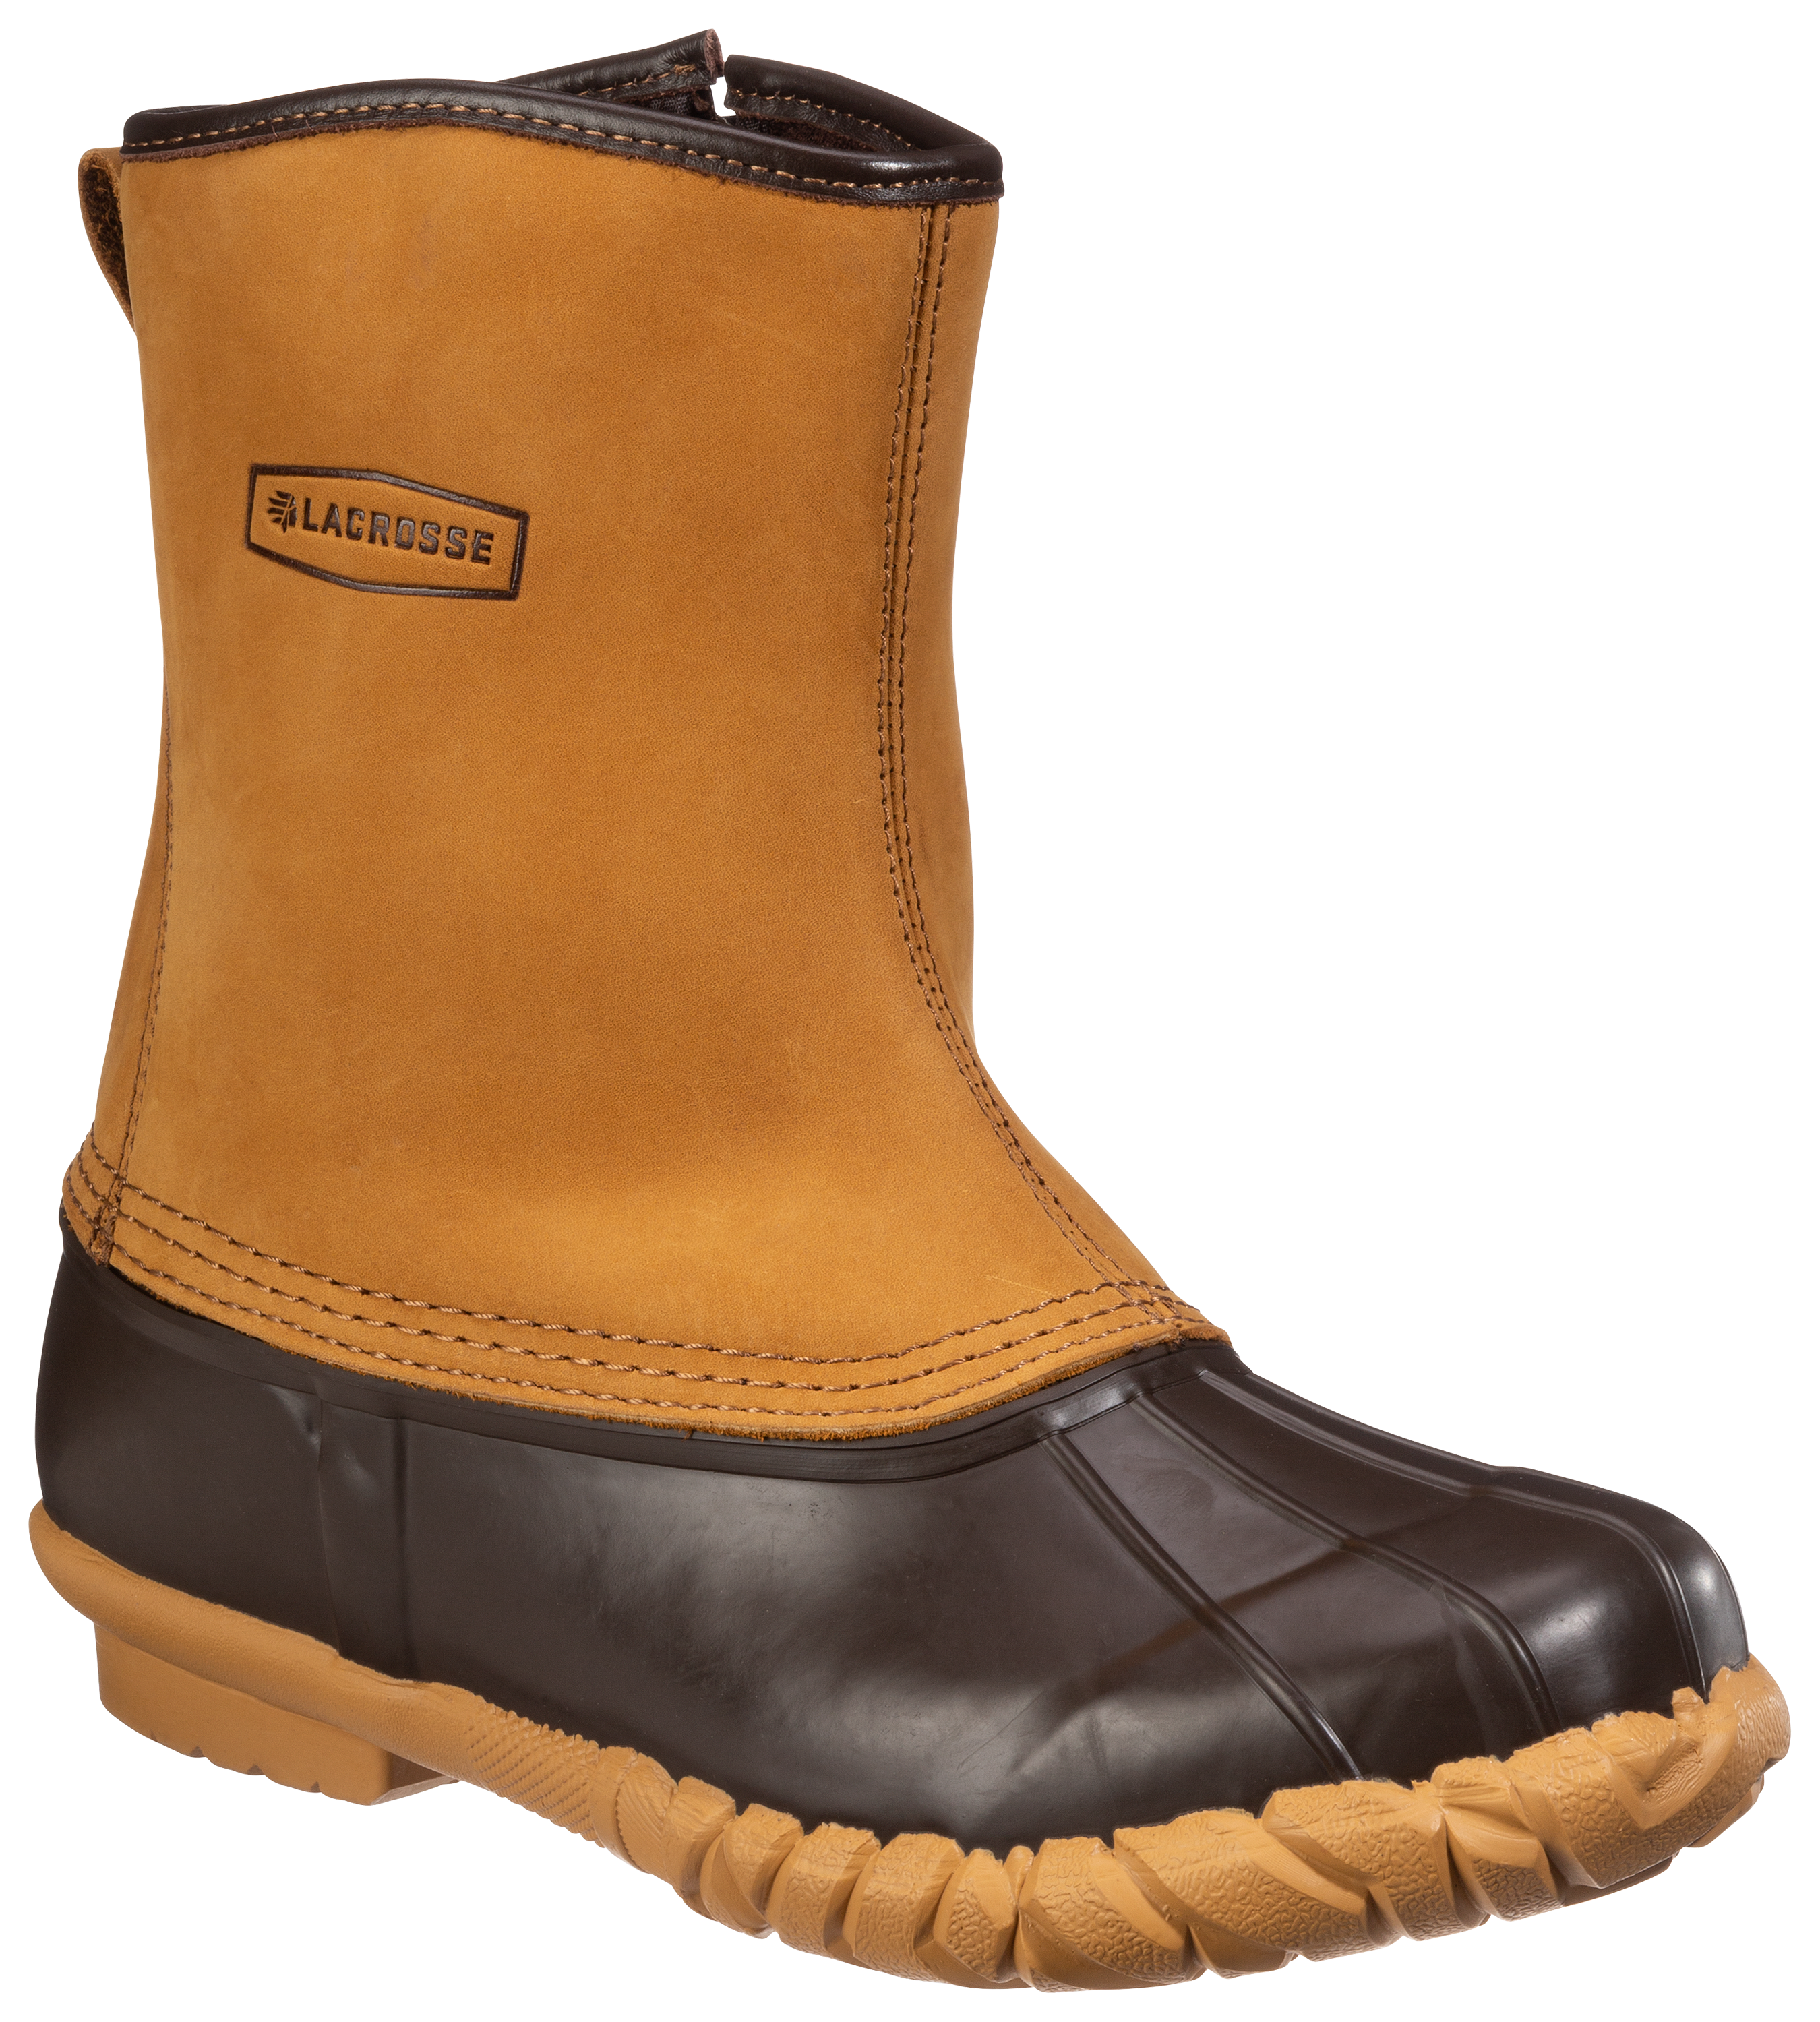 LaCrosse Mesquite II Insulated Waterproof Side-Zip Boots for Men - Brown - 10M